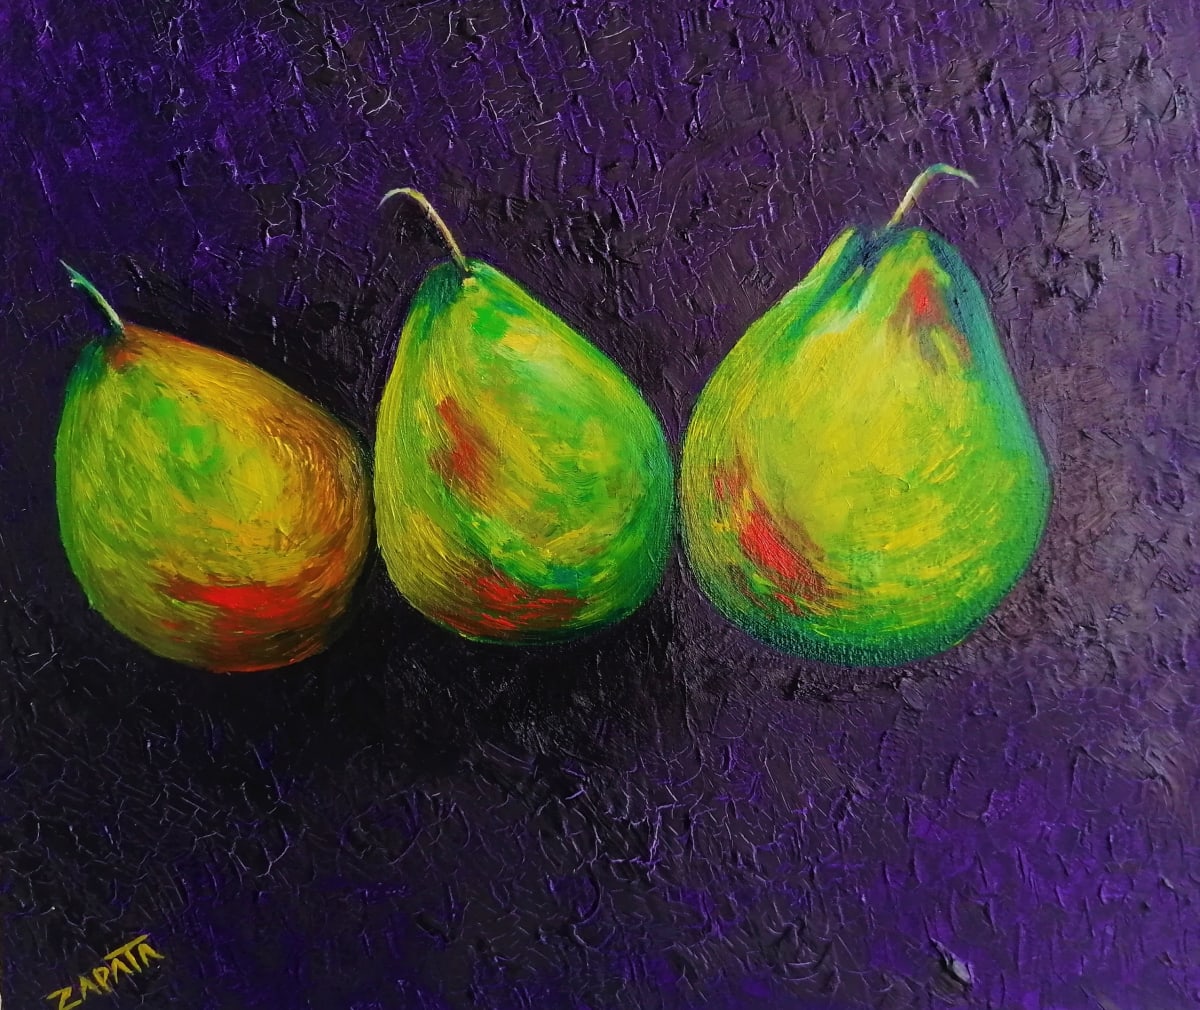 Pears on dioxazine purple background  Image: Composition of 3 pears on dioxazine purple color background. Gesso and impasto texture.